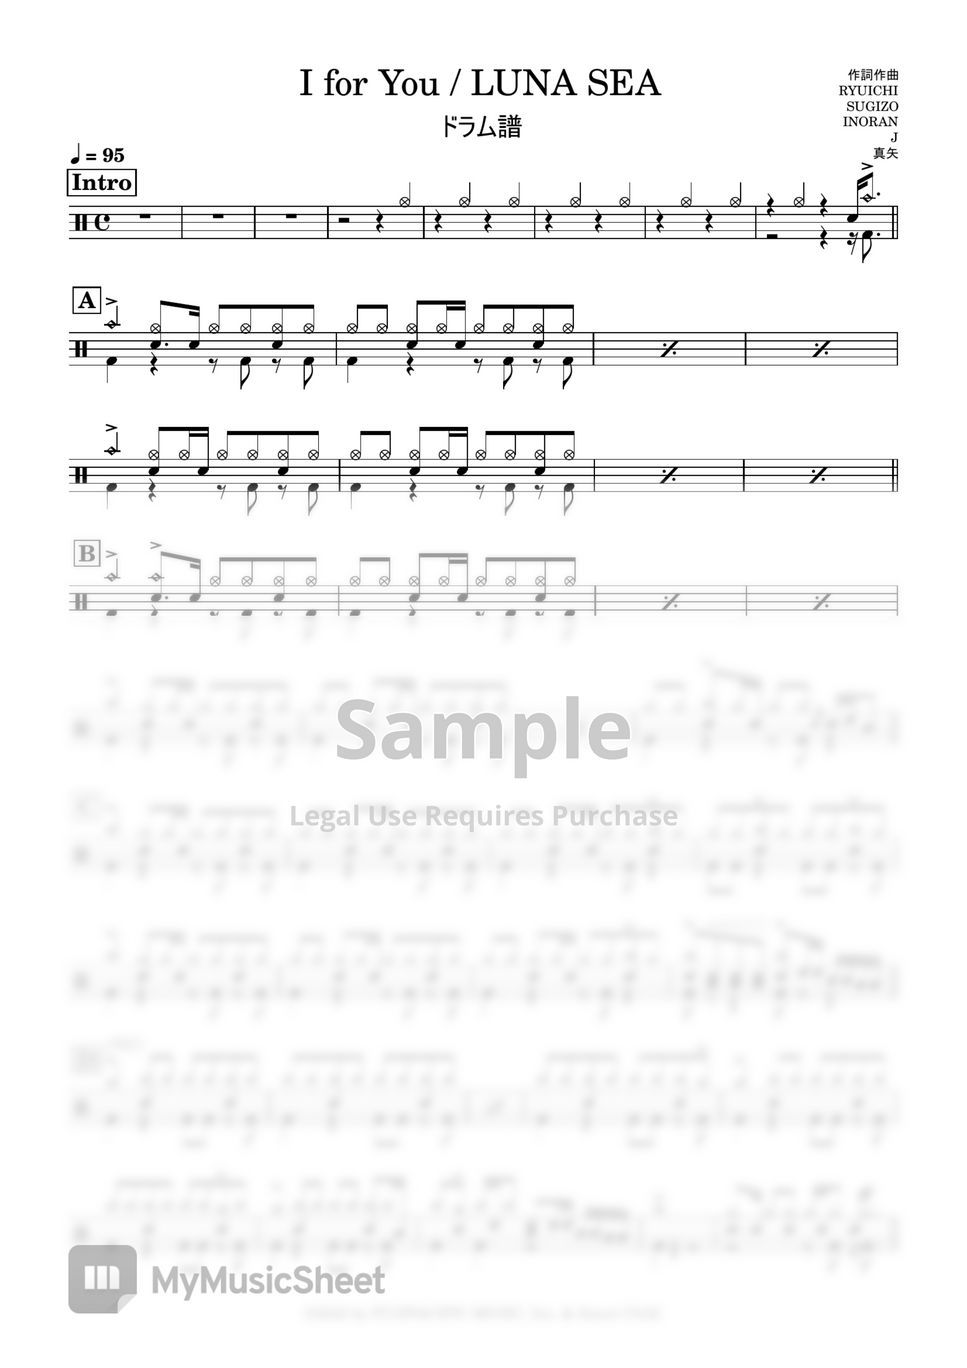 LUNA SEA - I for You (Drums Score & midi) by Kensaku Suzuki